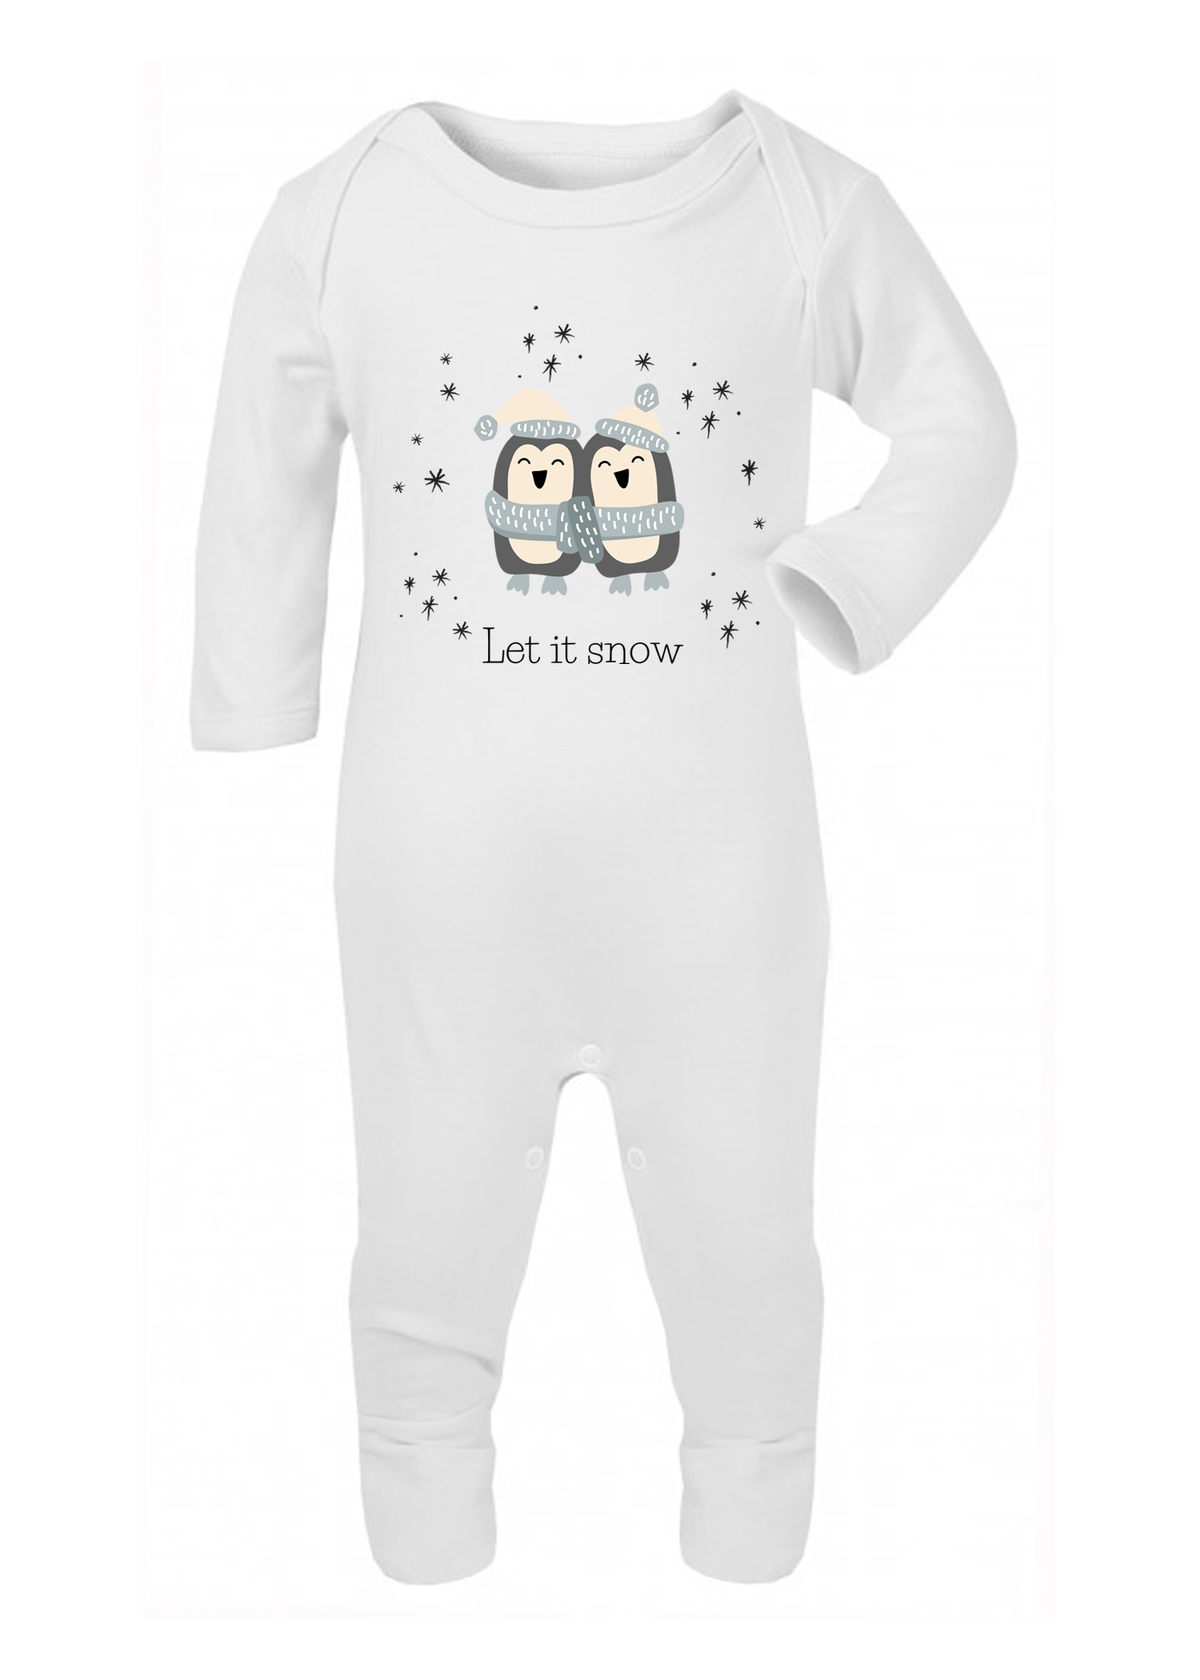 Christmas Let It Snow Printed Baby Sleepsuit or Vest